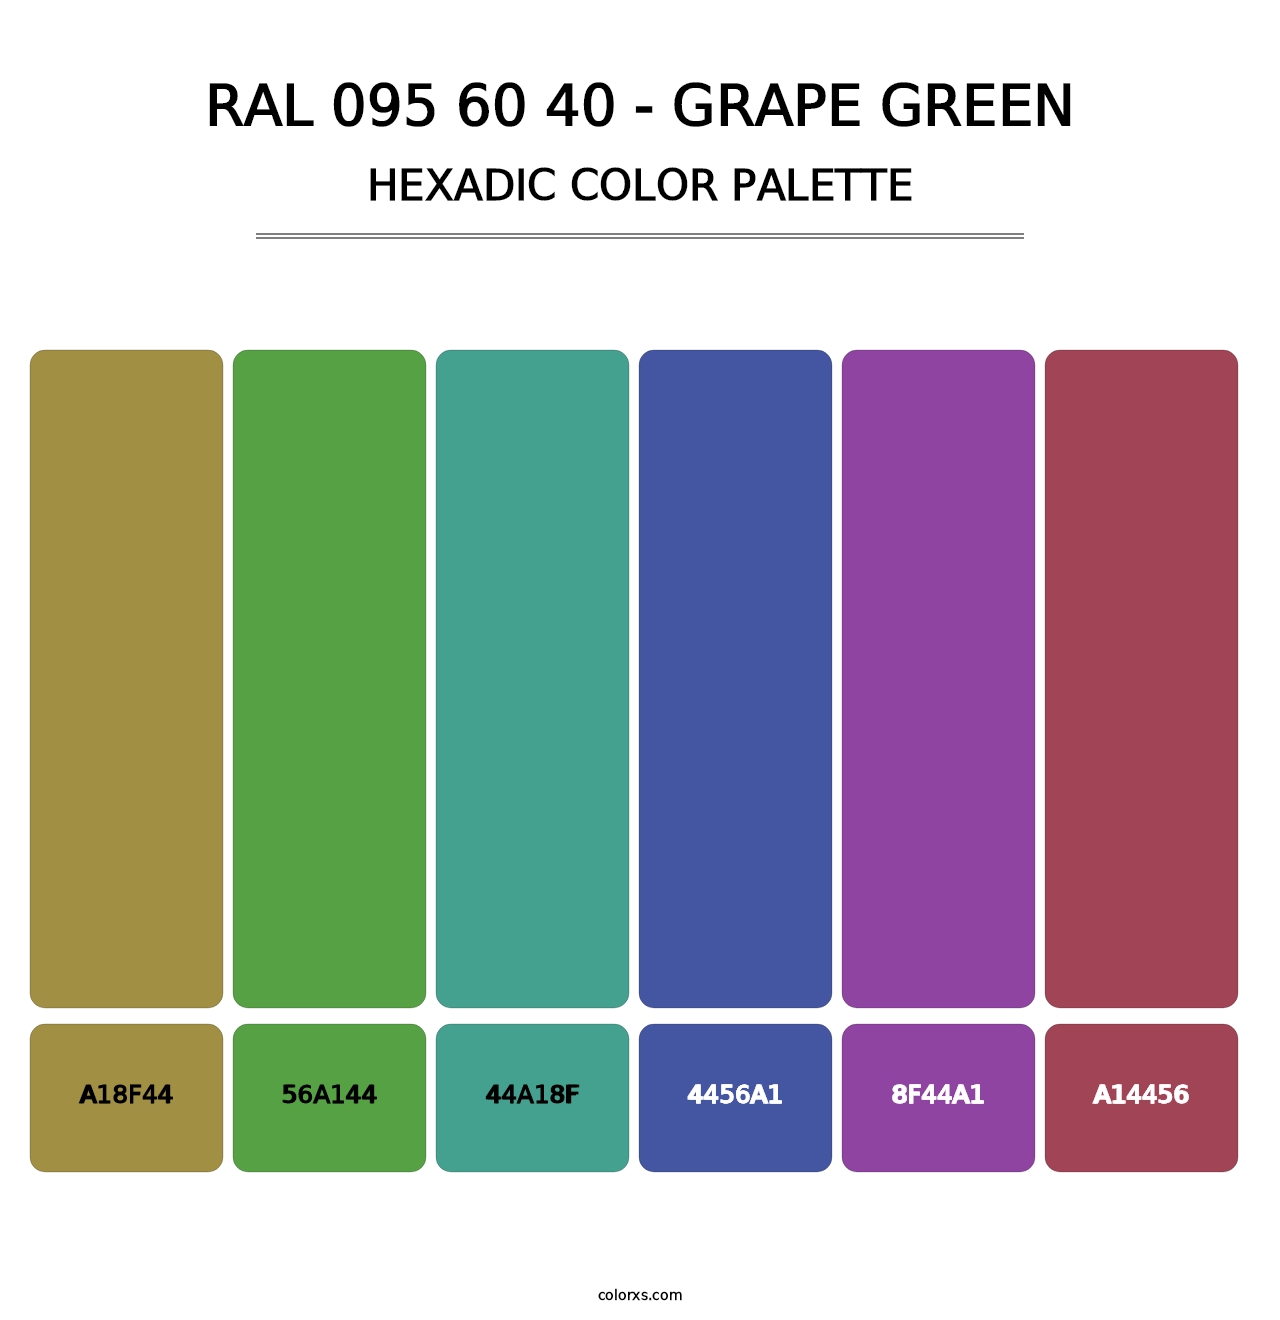 RAL 095 60 40 - Grape Green - Hexadic Color Palette